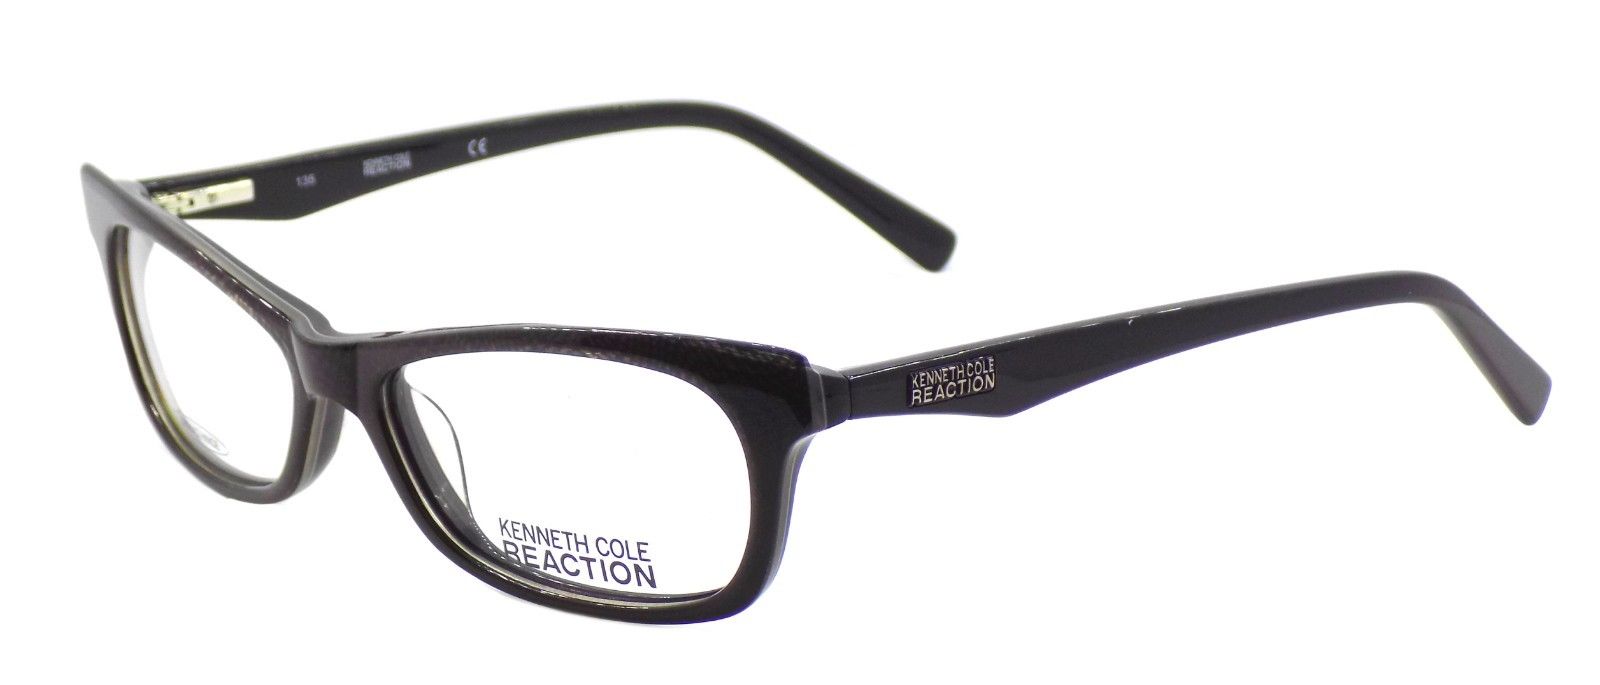 1-Kenneth Cole REACTION KC746 005 Women's Eyeglasses Frames 53-15-135 Black + CASE-664689599431-IKSpecs